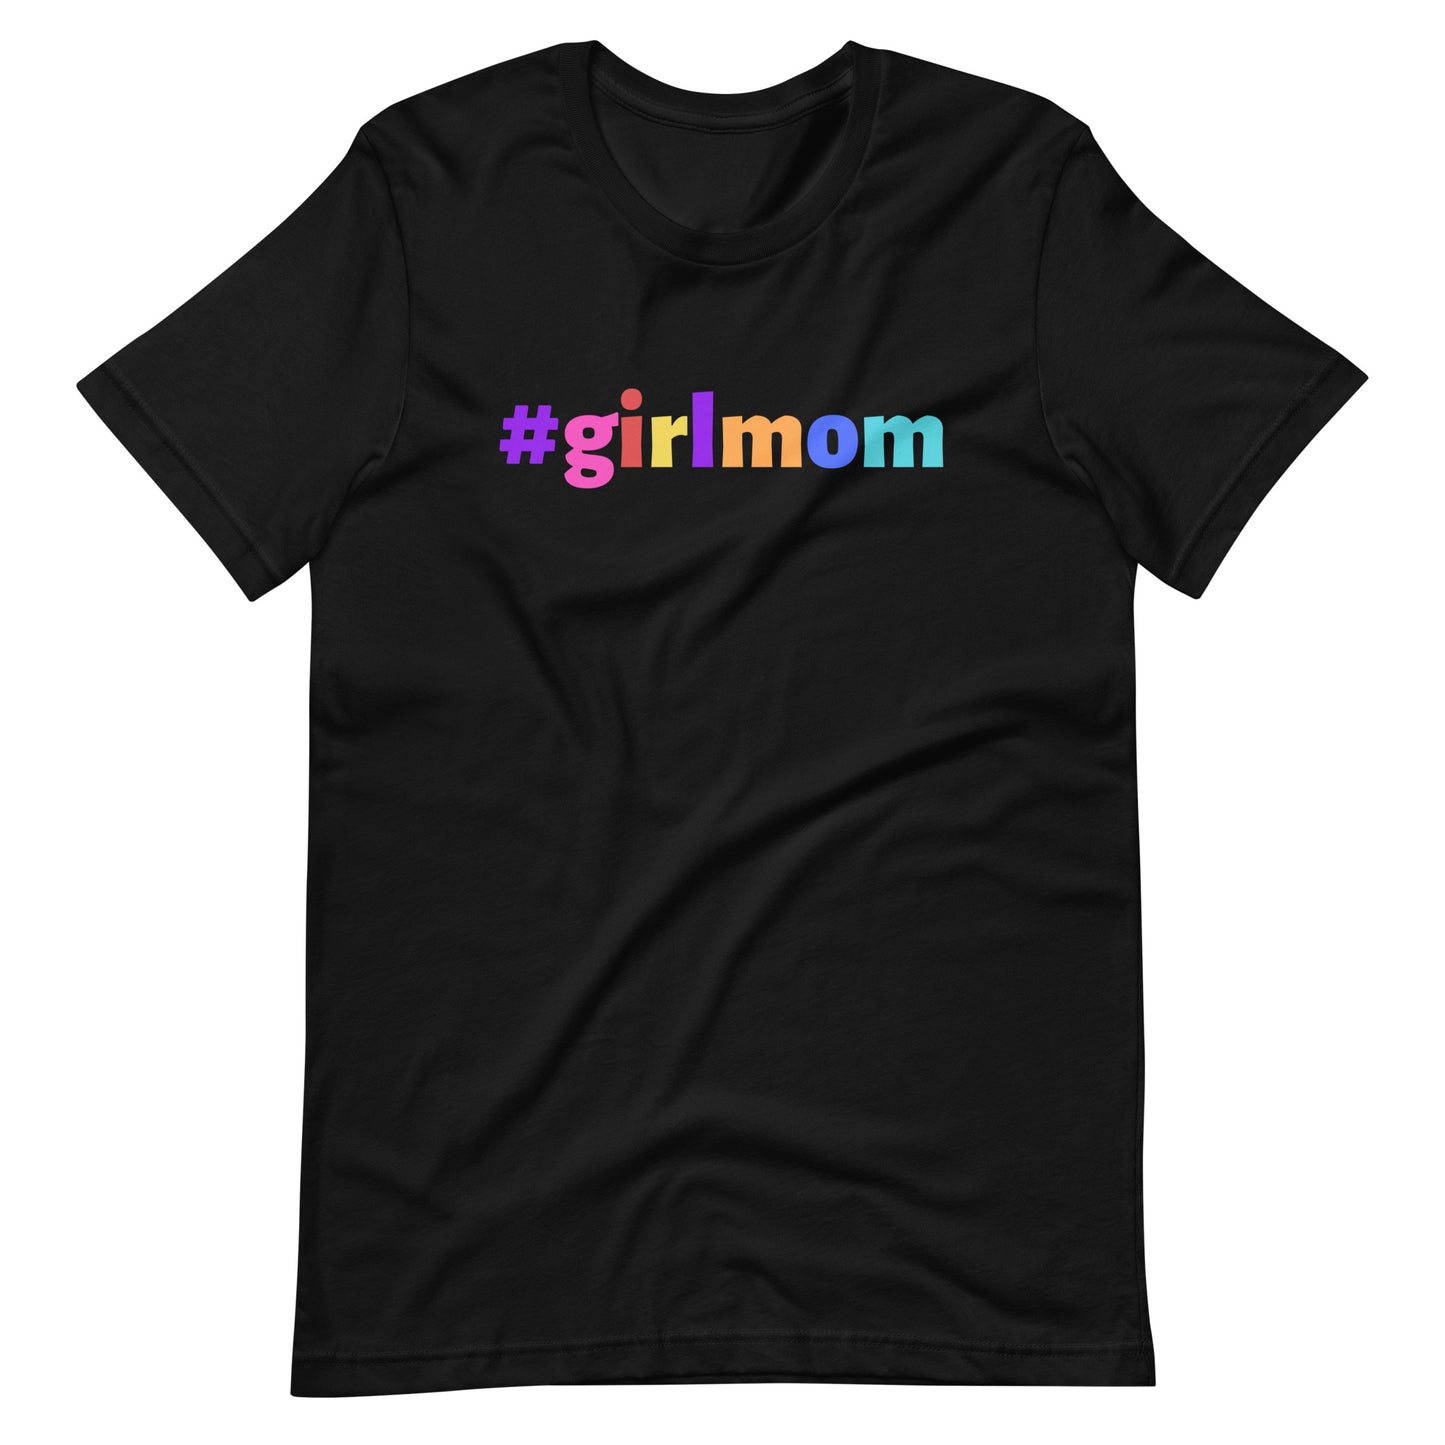 #girlmom t-shirt multi-color letters